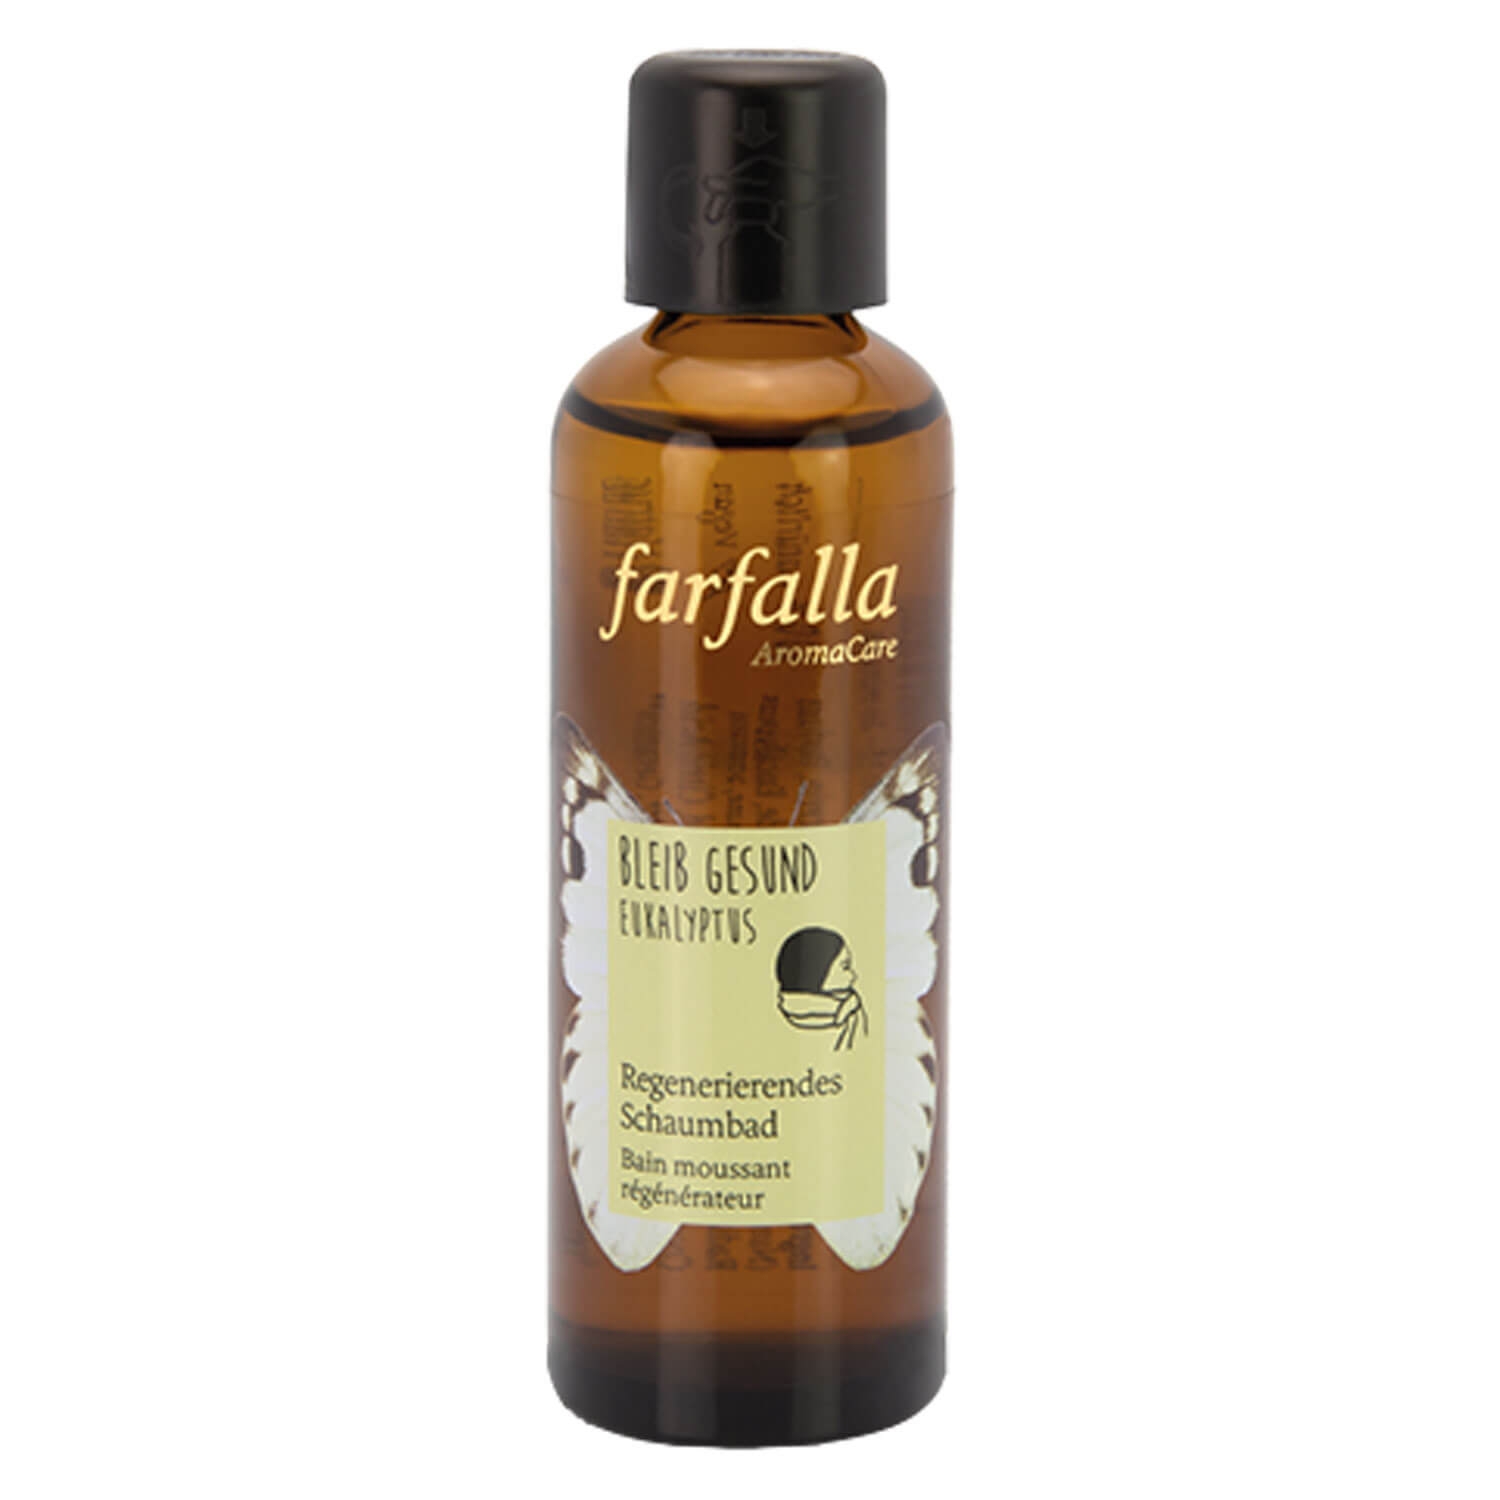 Image du produit de Farfalla Care - bleib gesund, Eukalyptus, Regenerierendes Schaumbad